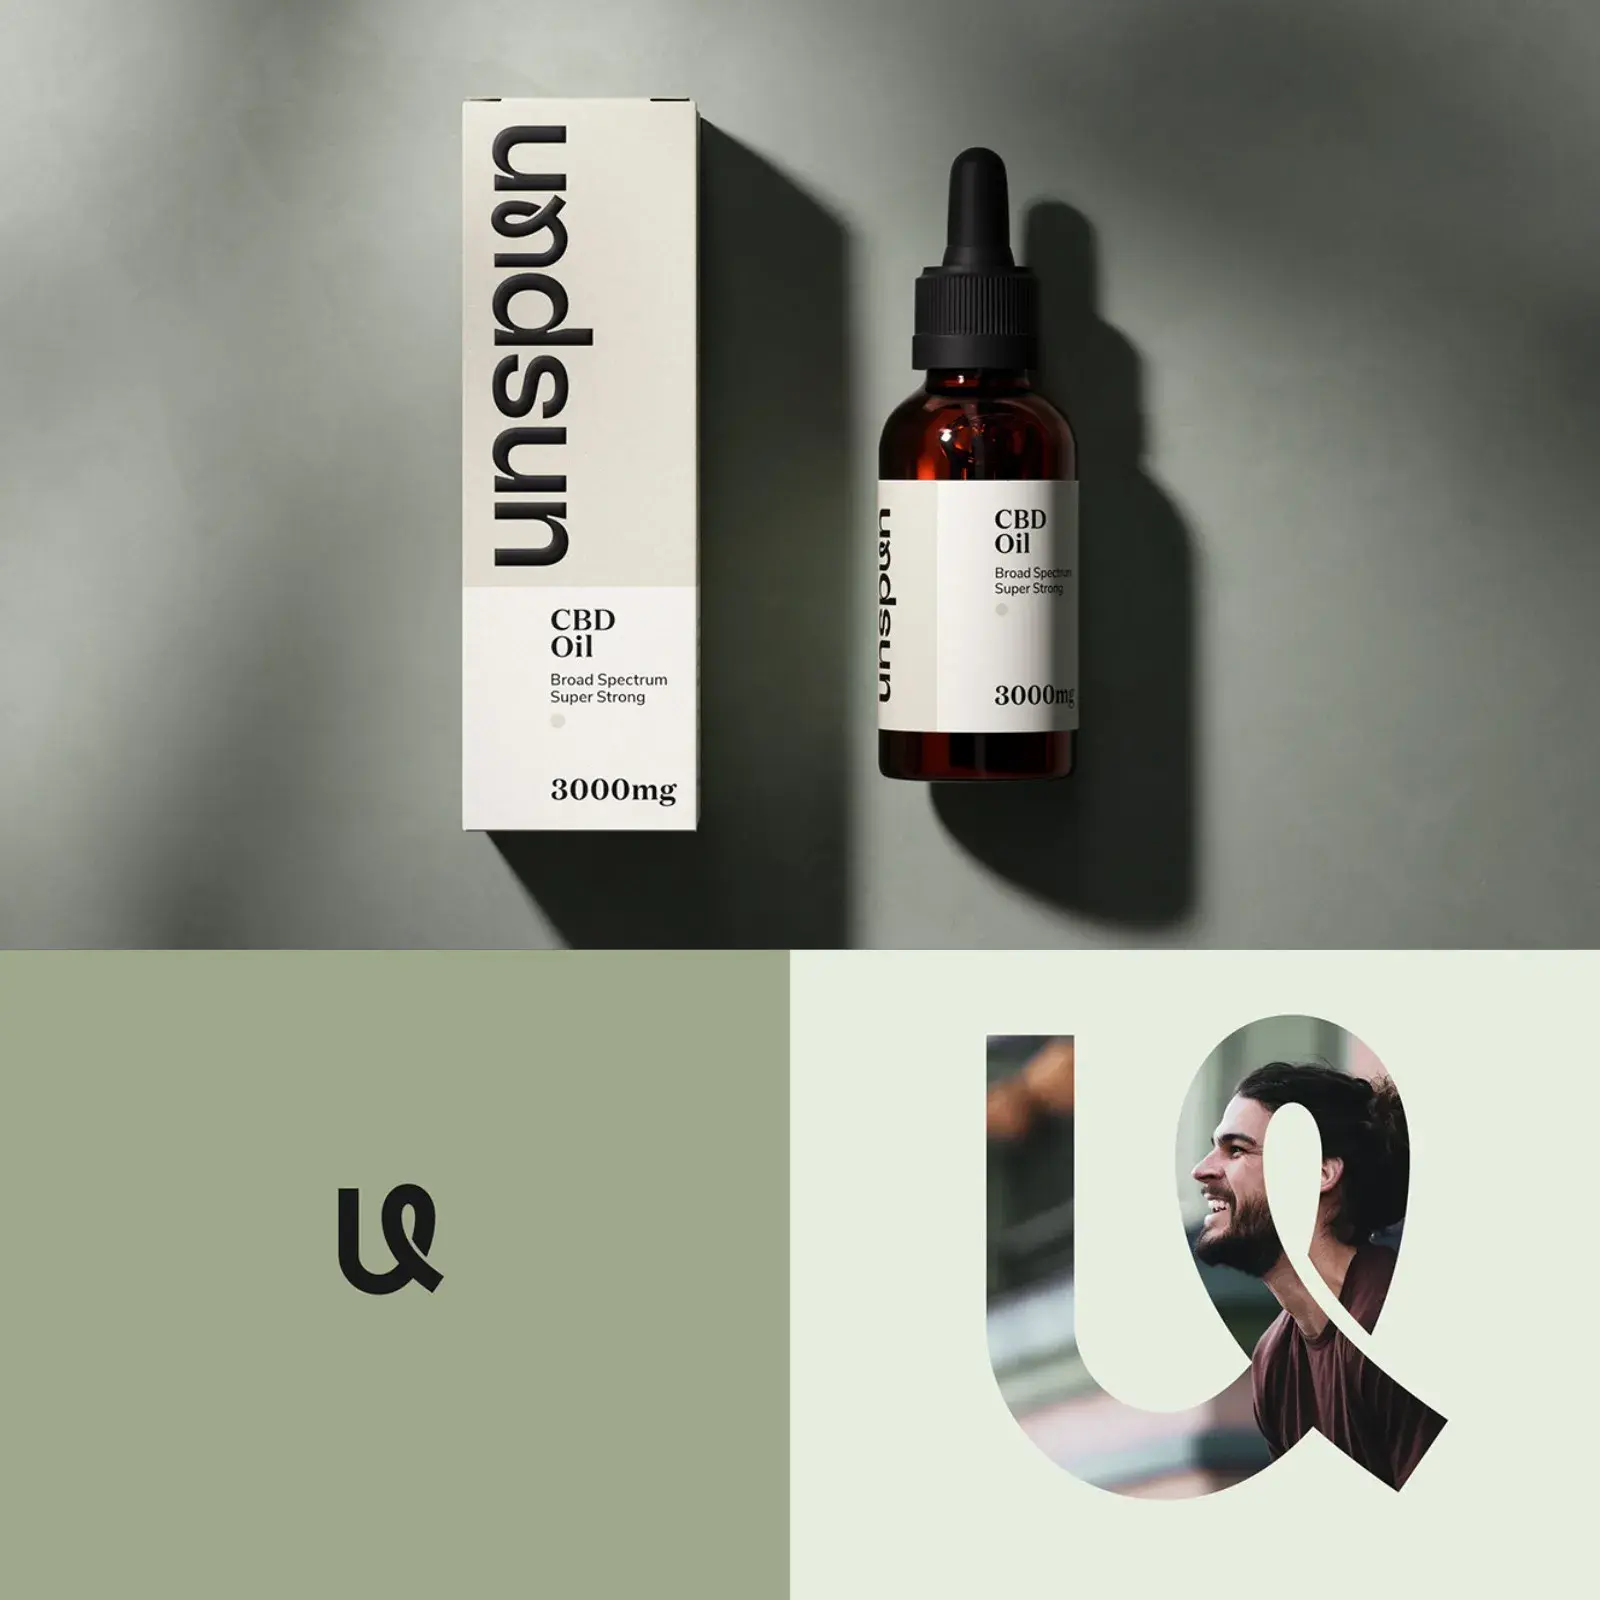 Unspun CBD: Masterful Branding and Visual Identity